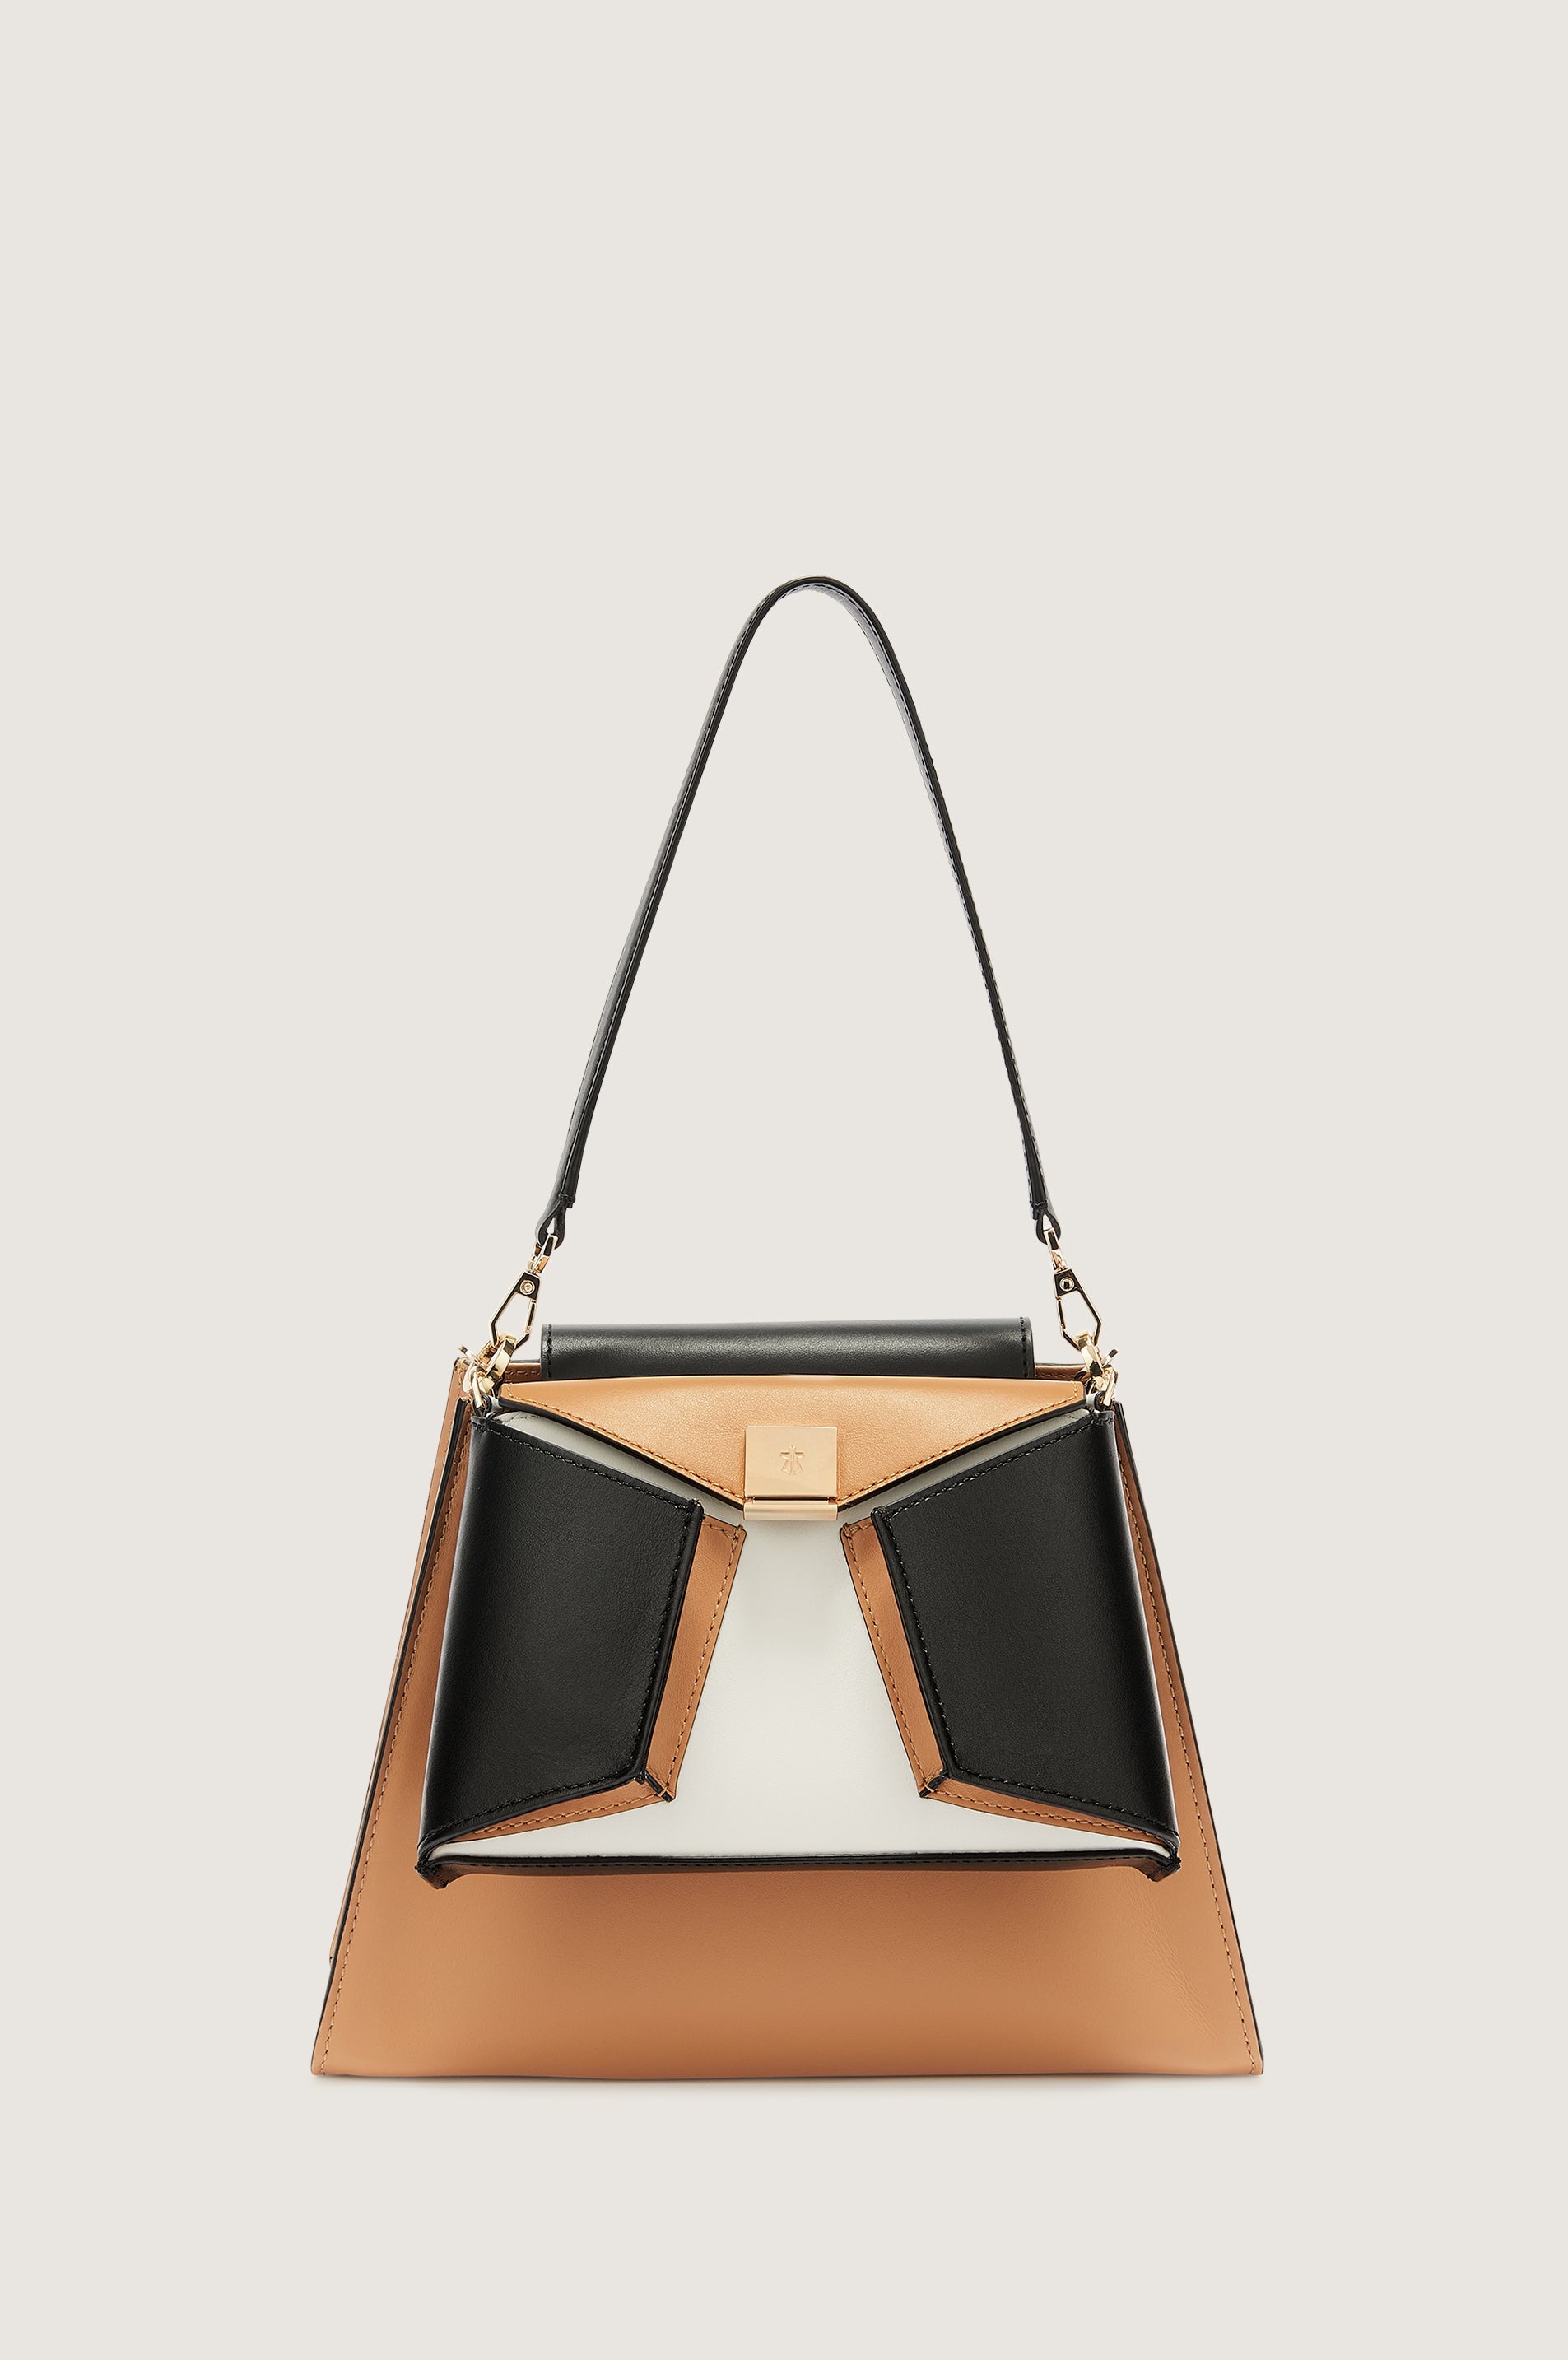 Lara Bellini LIZ TWIN Calfskin Handbag in Light Gold